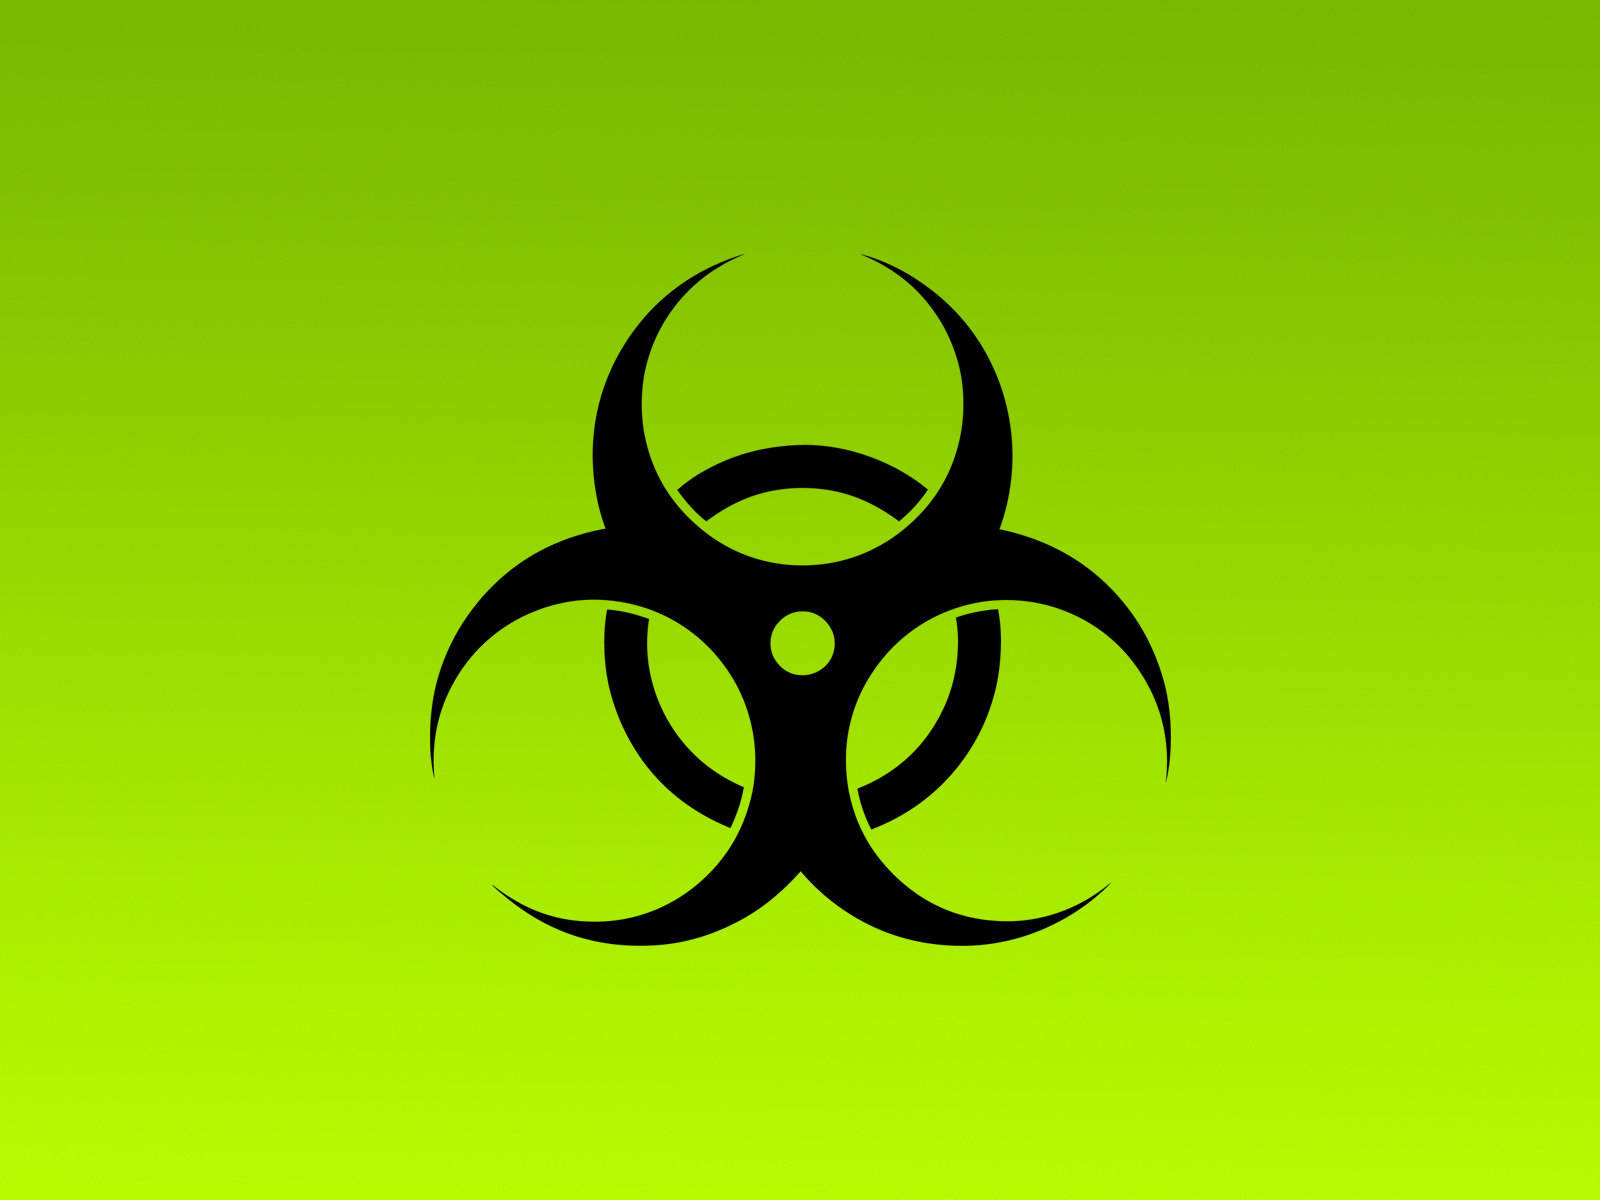 wallpapers-box-biohazard-radioactive-symbol-hd-wallpapers